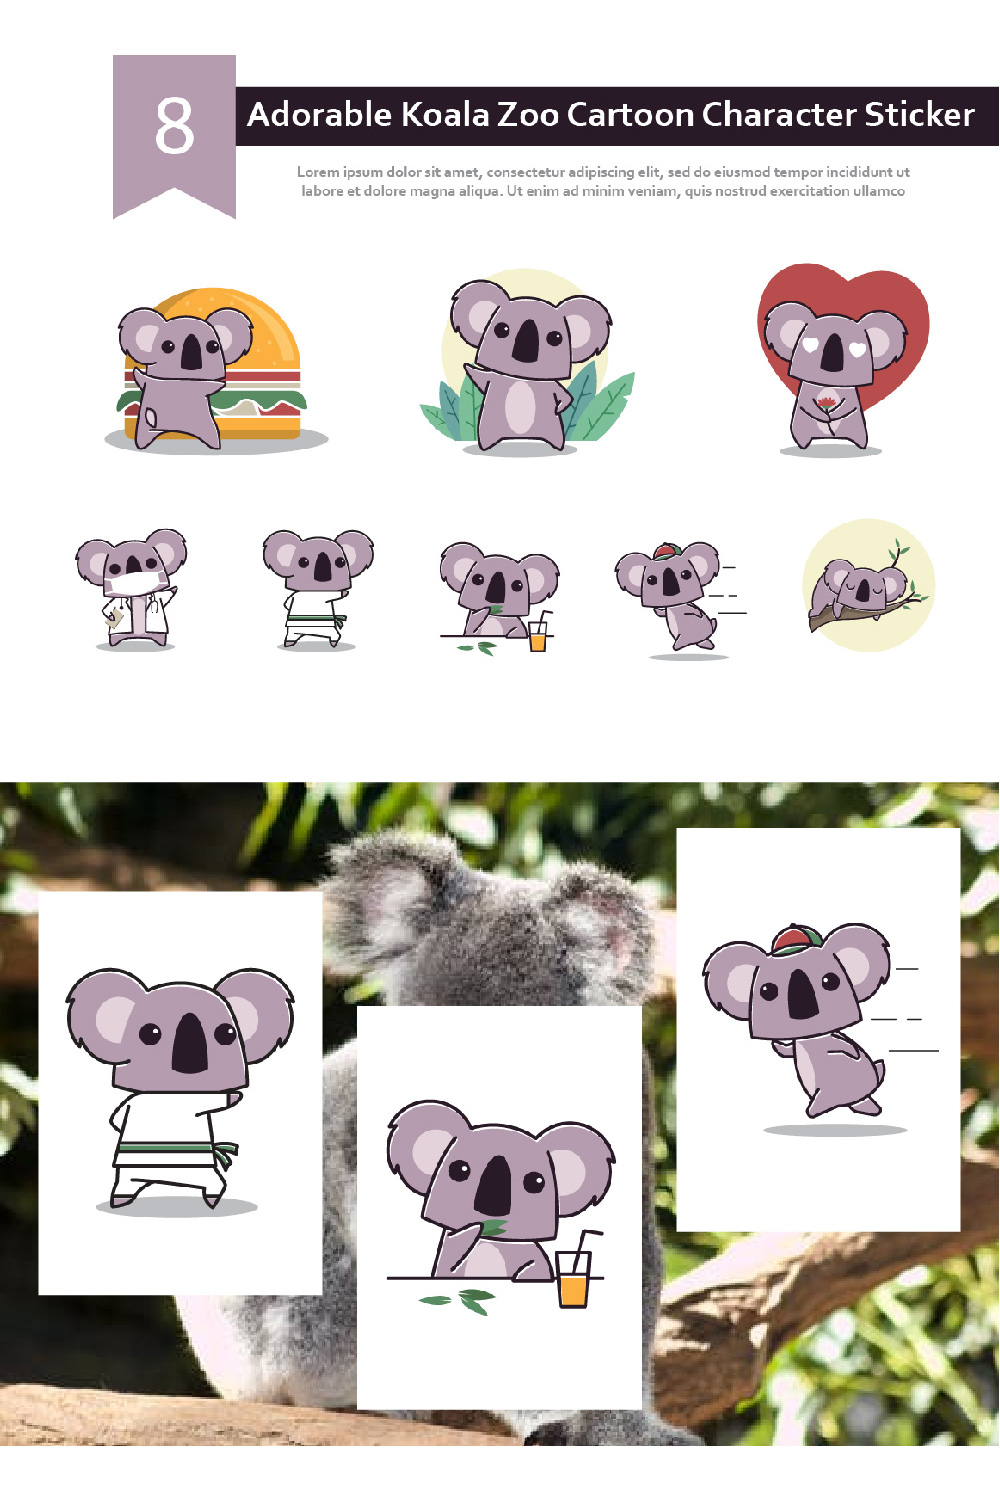 8 Adorable Koala Zoo Cartoon Character Sticker pinterest image.